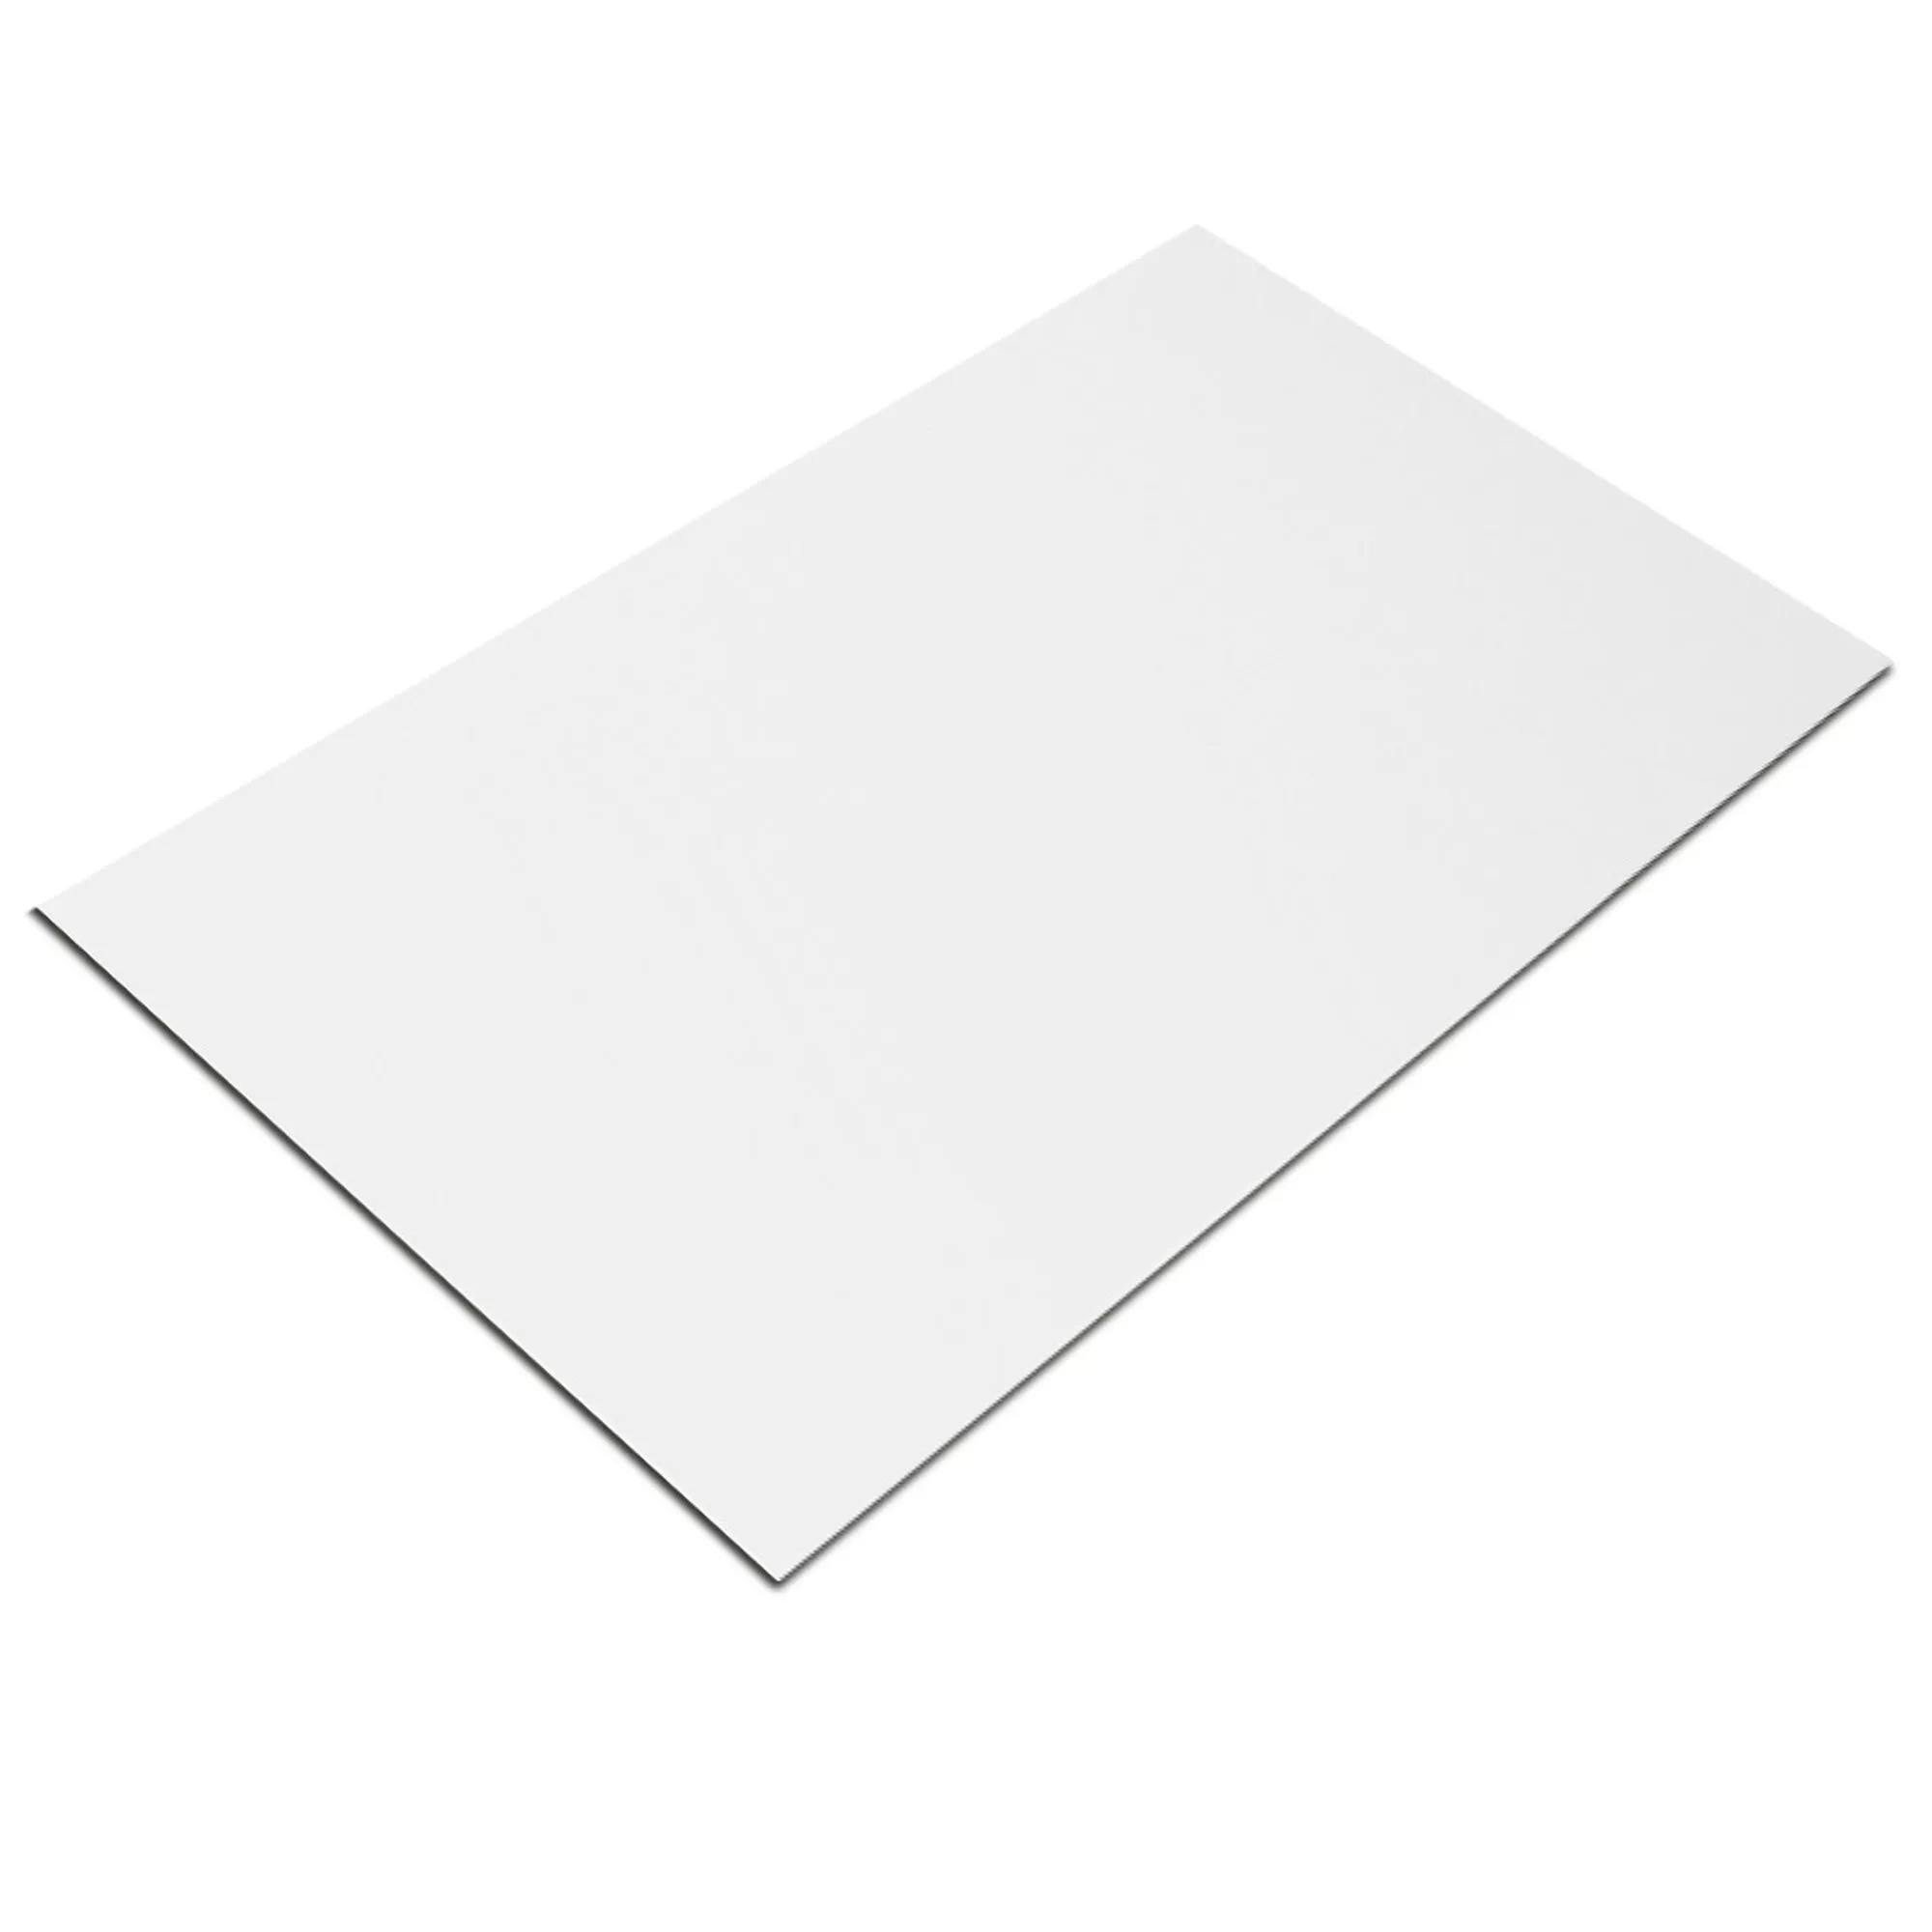 Sample Wall Tiles Fenway White Mat 10x30cm